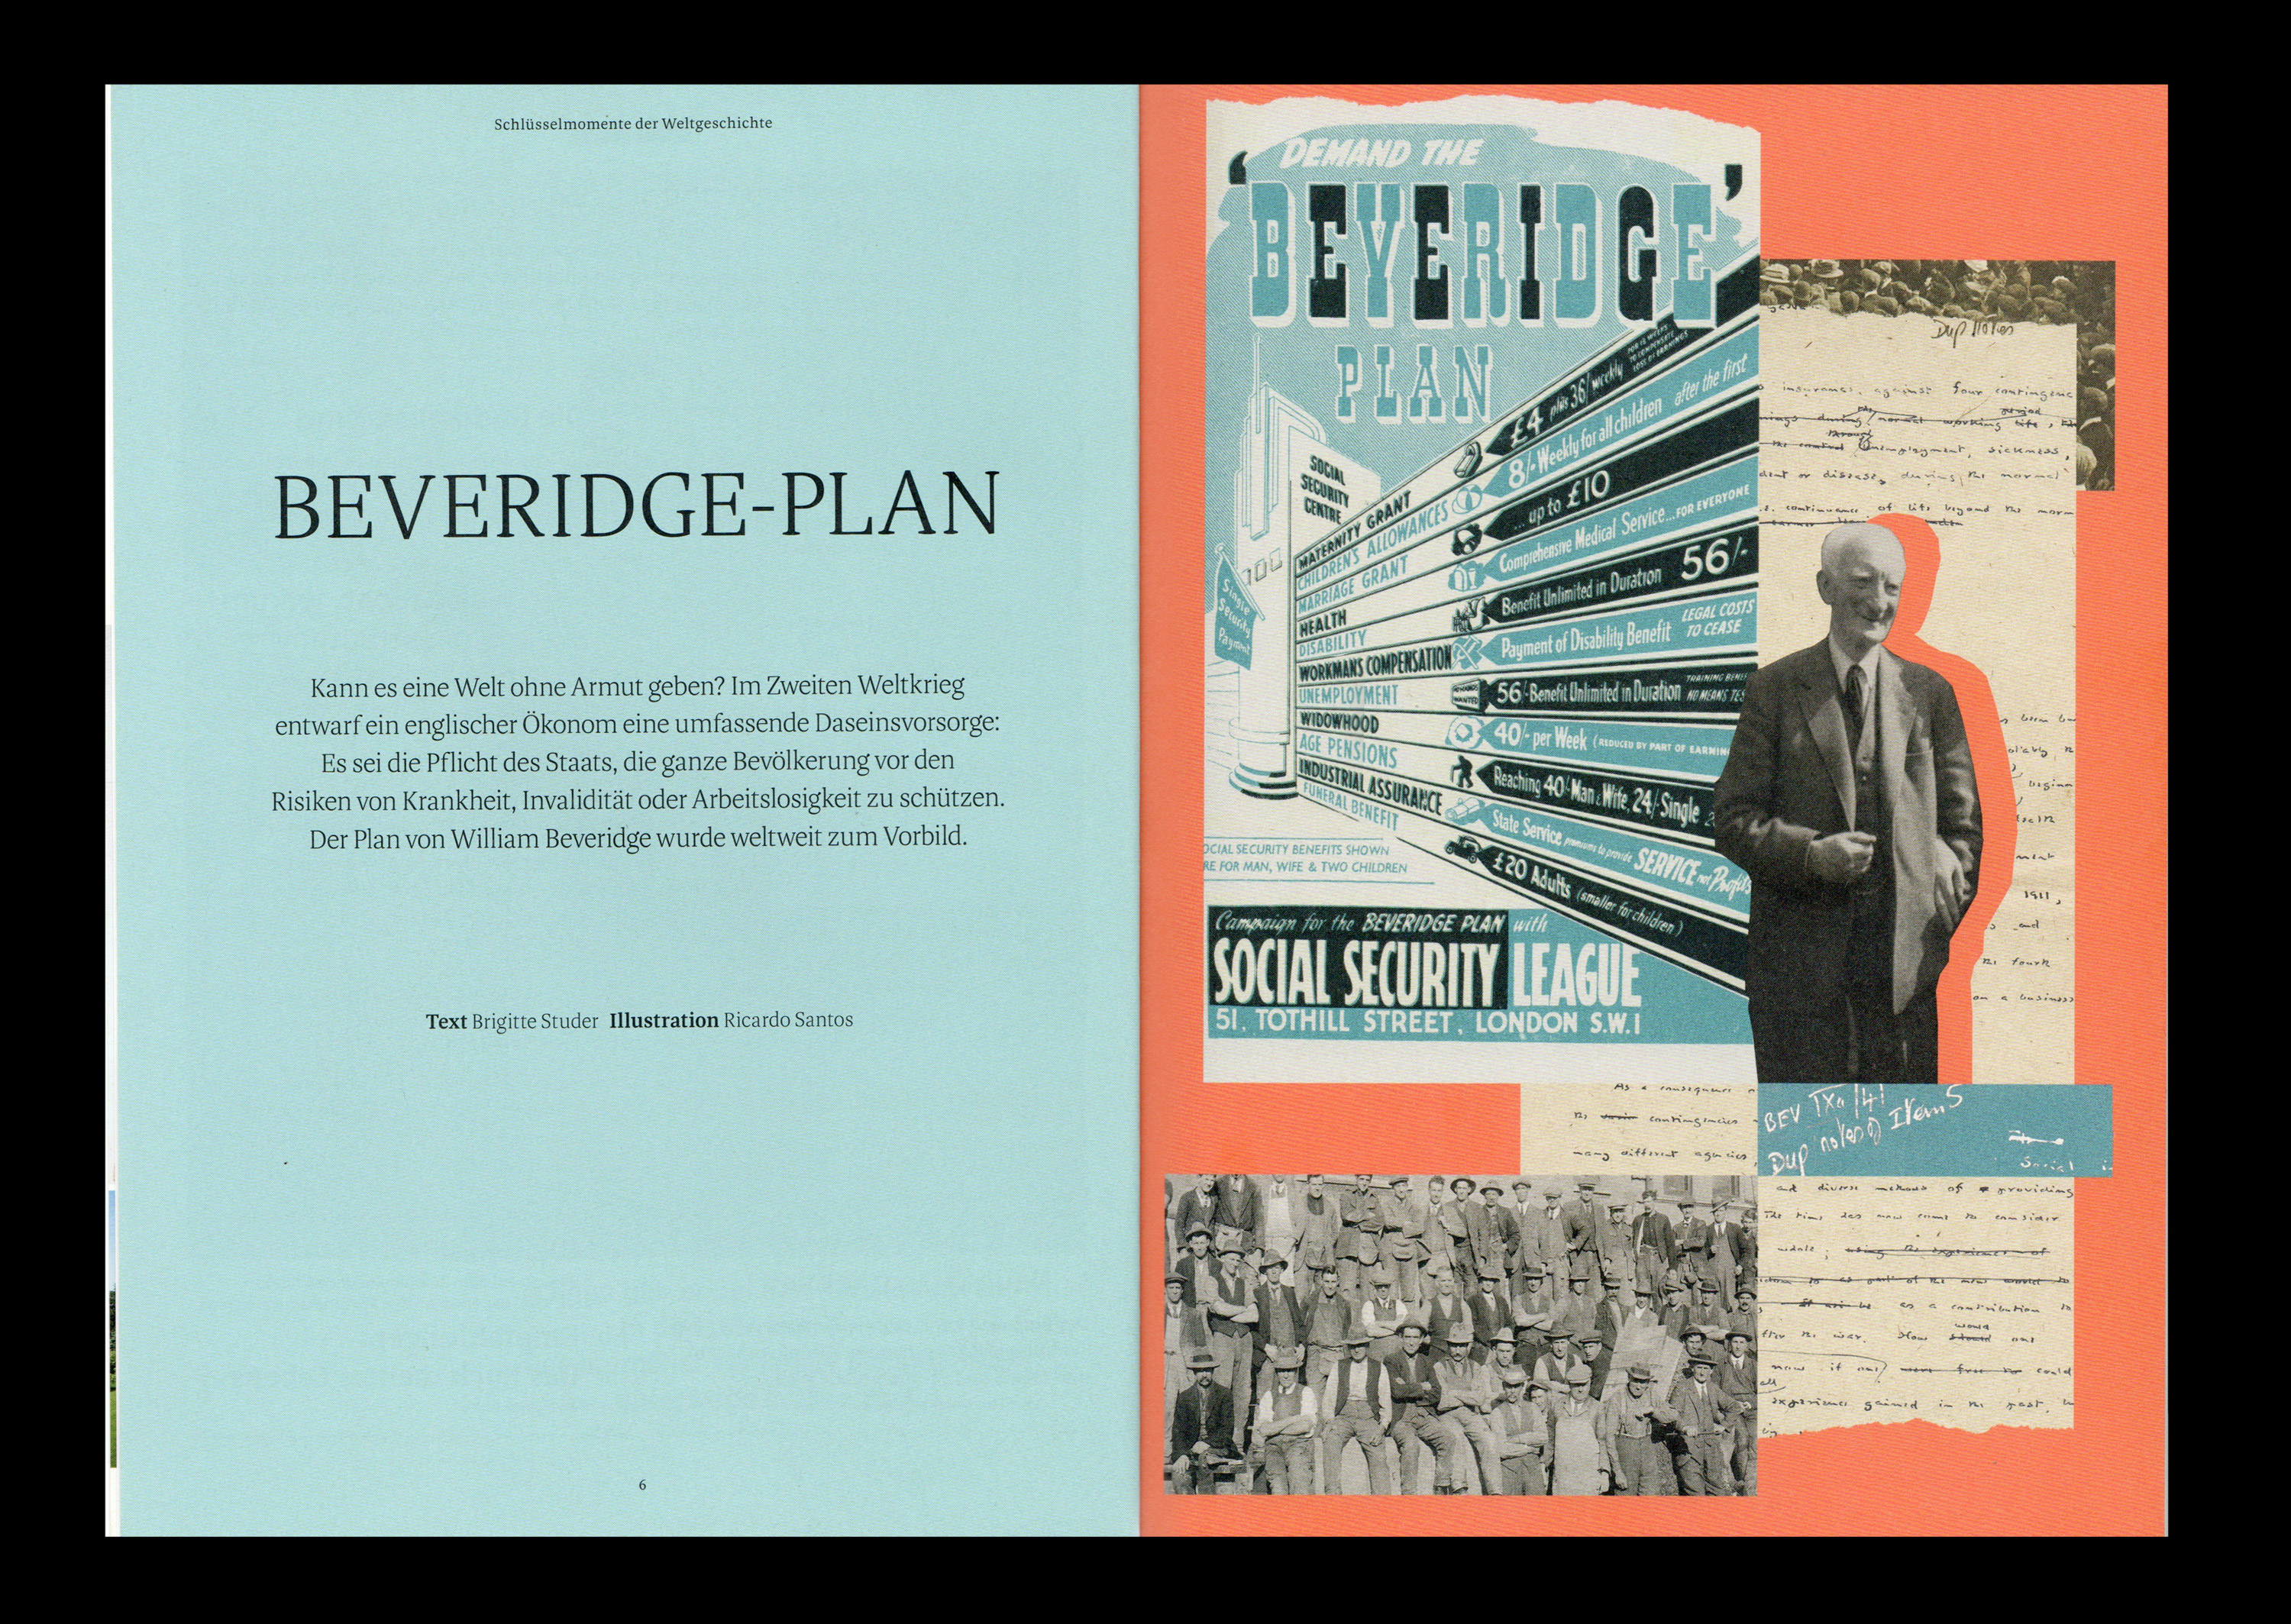 The Beveridge Plan illustration